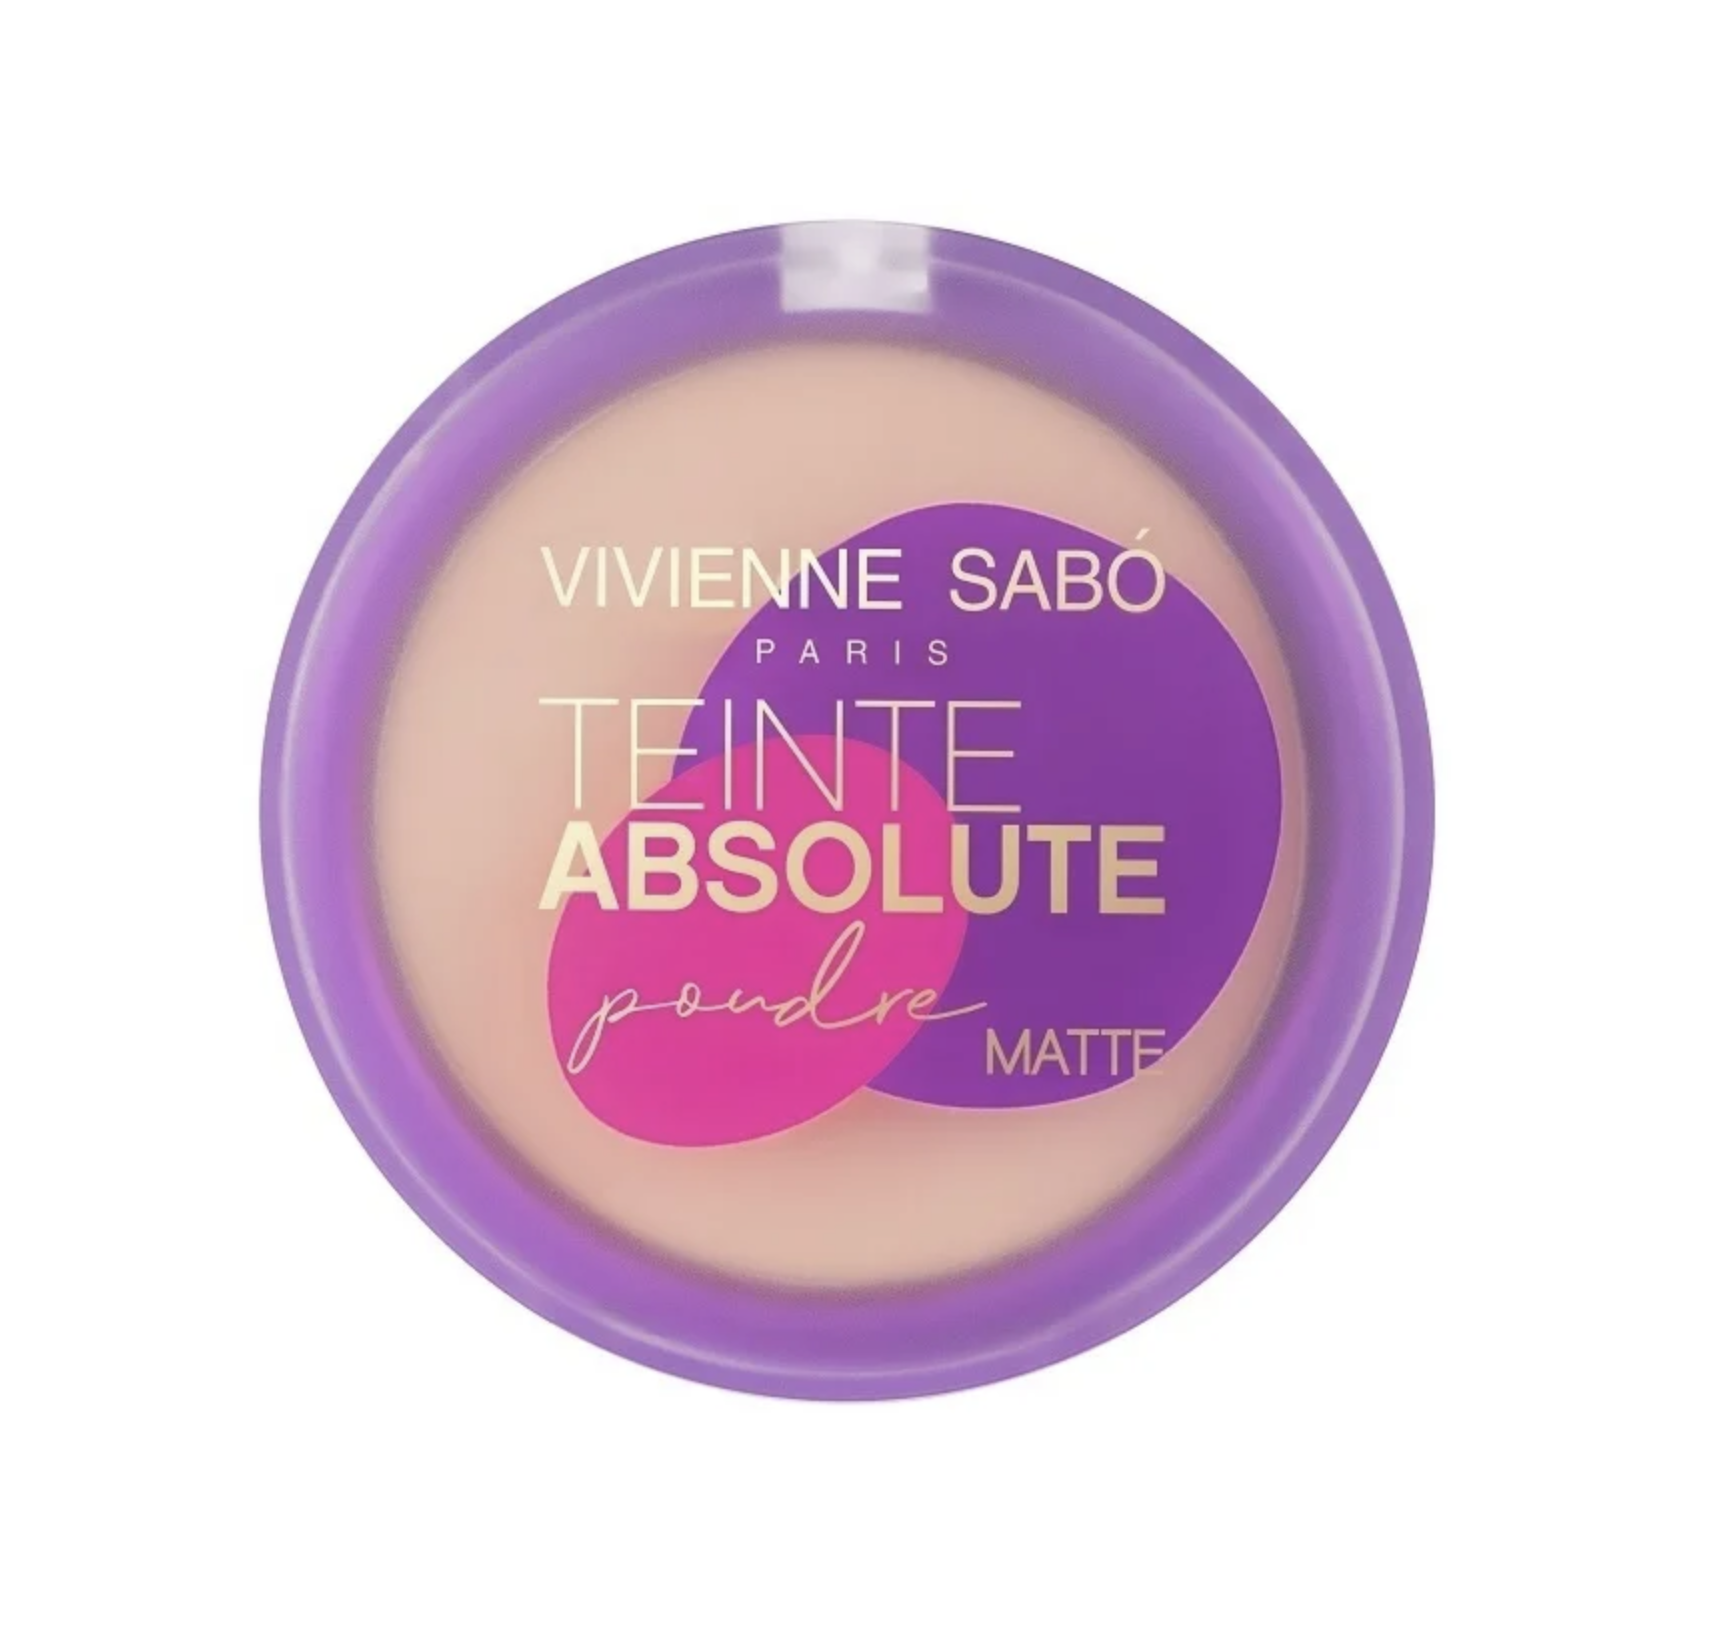    / Vivienne Sabo -     Teinte Absolute Poudre Matte  04, 6 